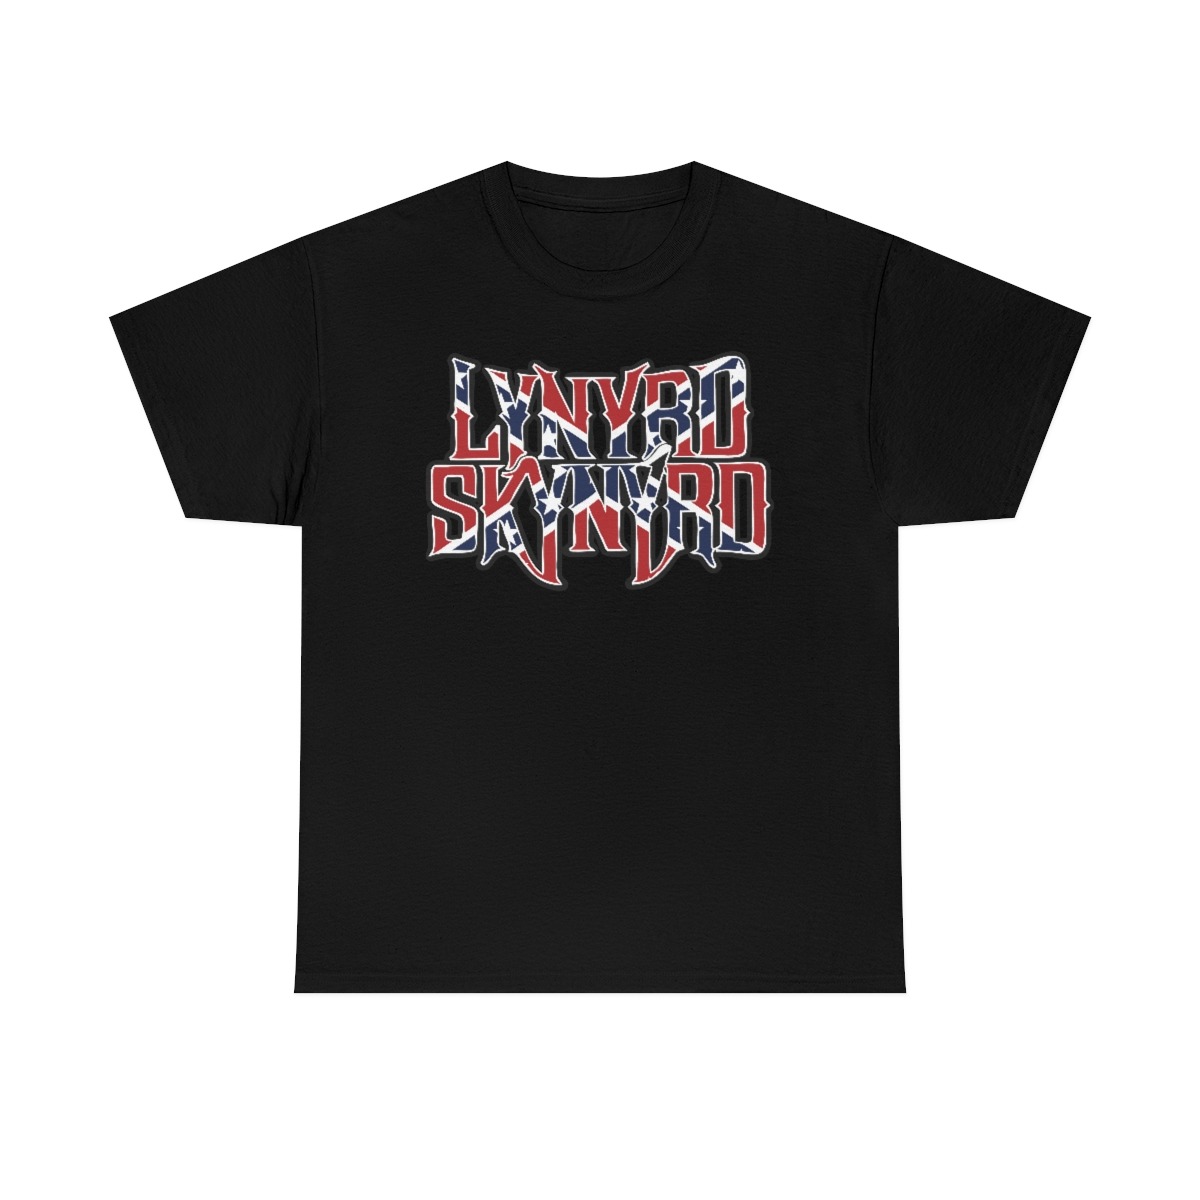 Lynyrd Skynyrd shirt - Lynyrd Skynyrd Merch - Lynyrd Skynyrd T-shirt - Lynyrd Flag - Black T-Shirt - graphic tee - Rock t shirt